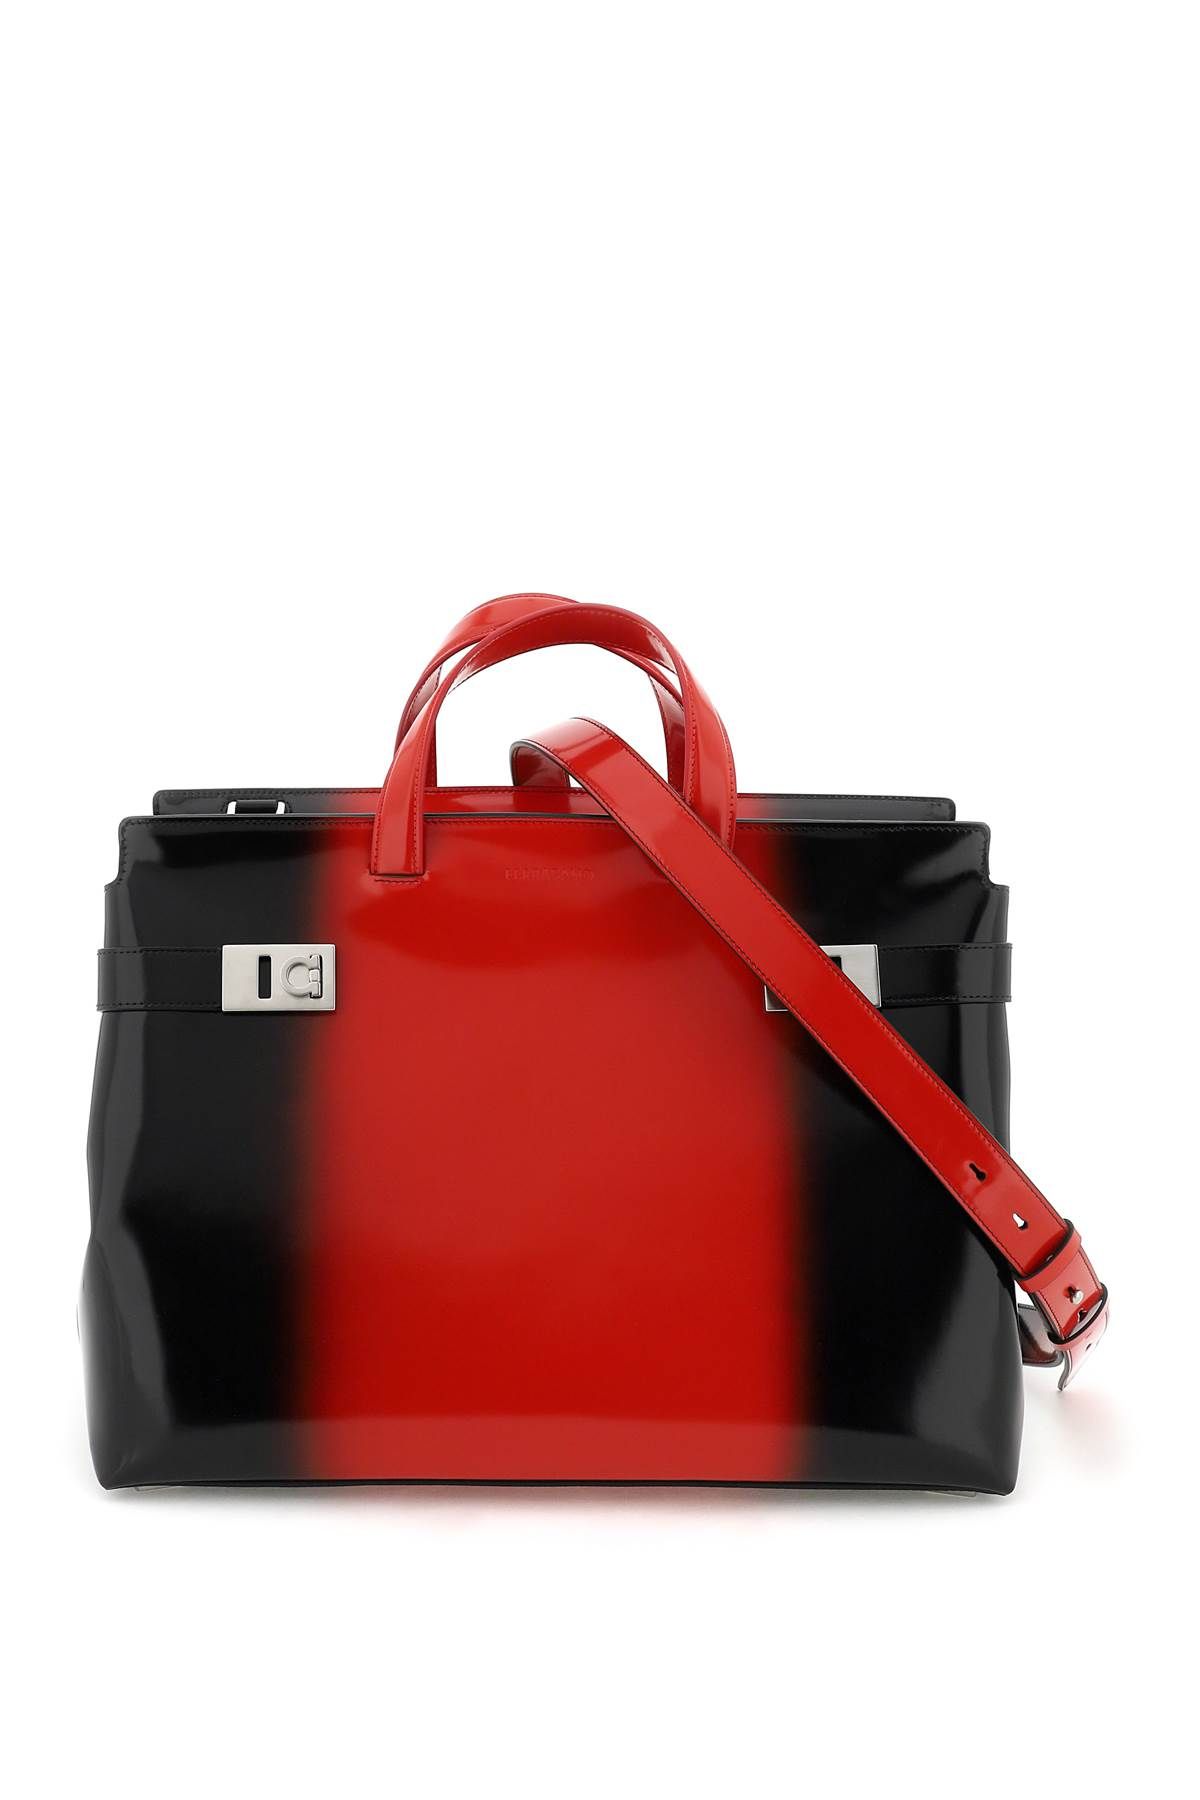 Ferragamo Gradient Leather Tote Bag In Black,red